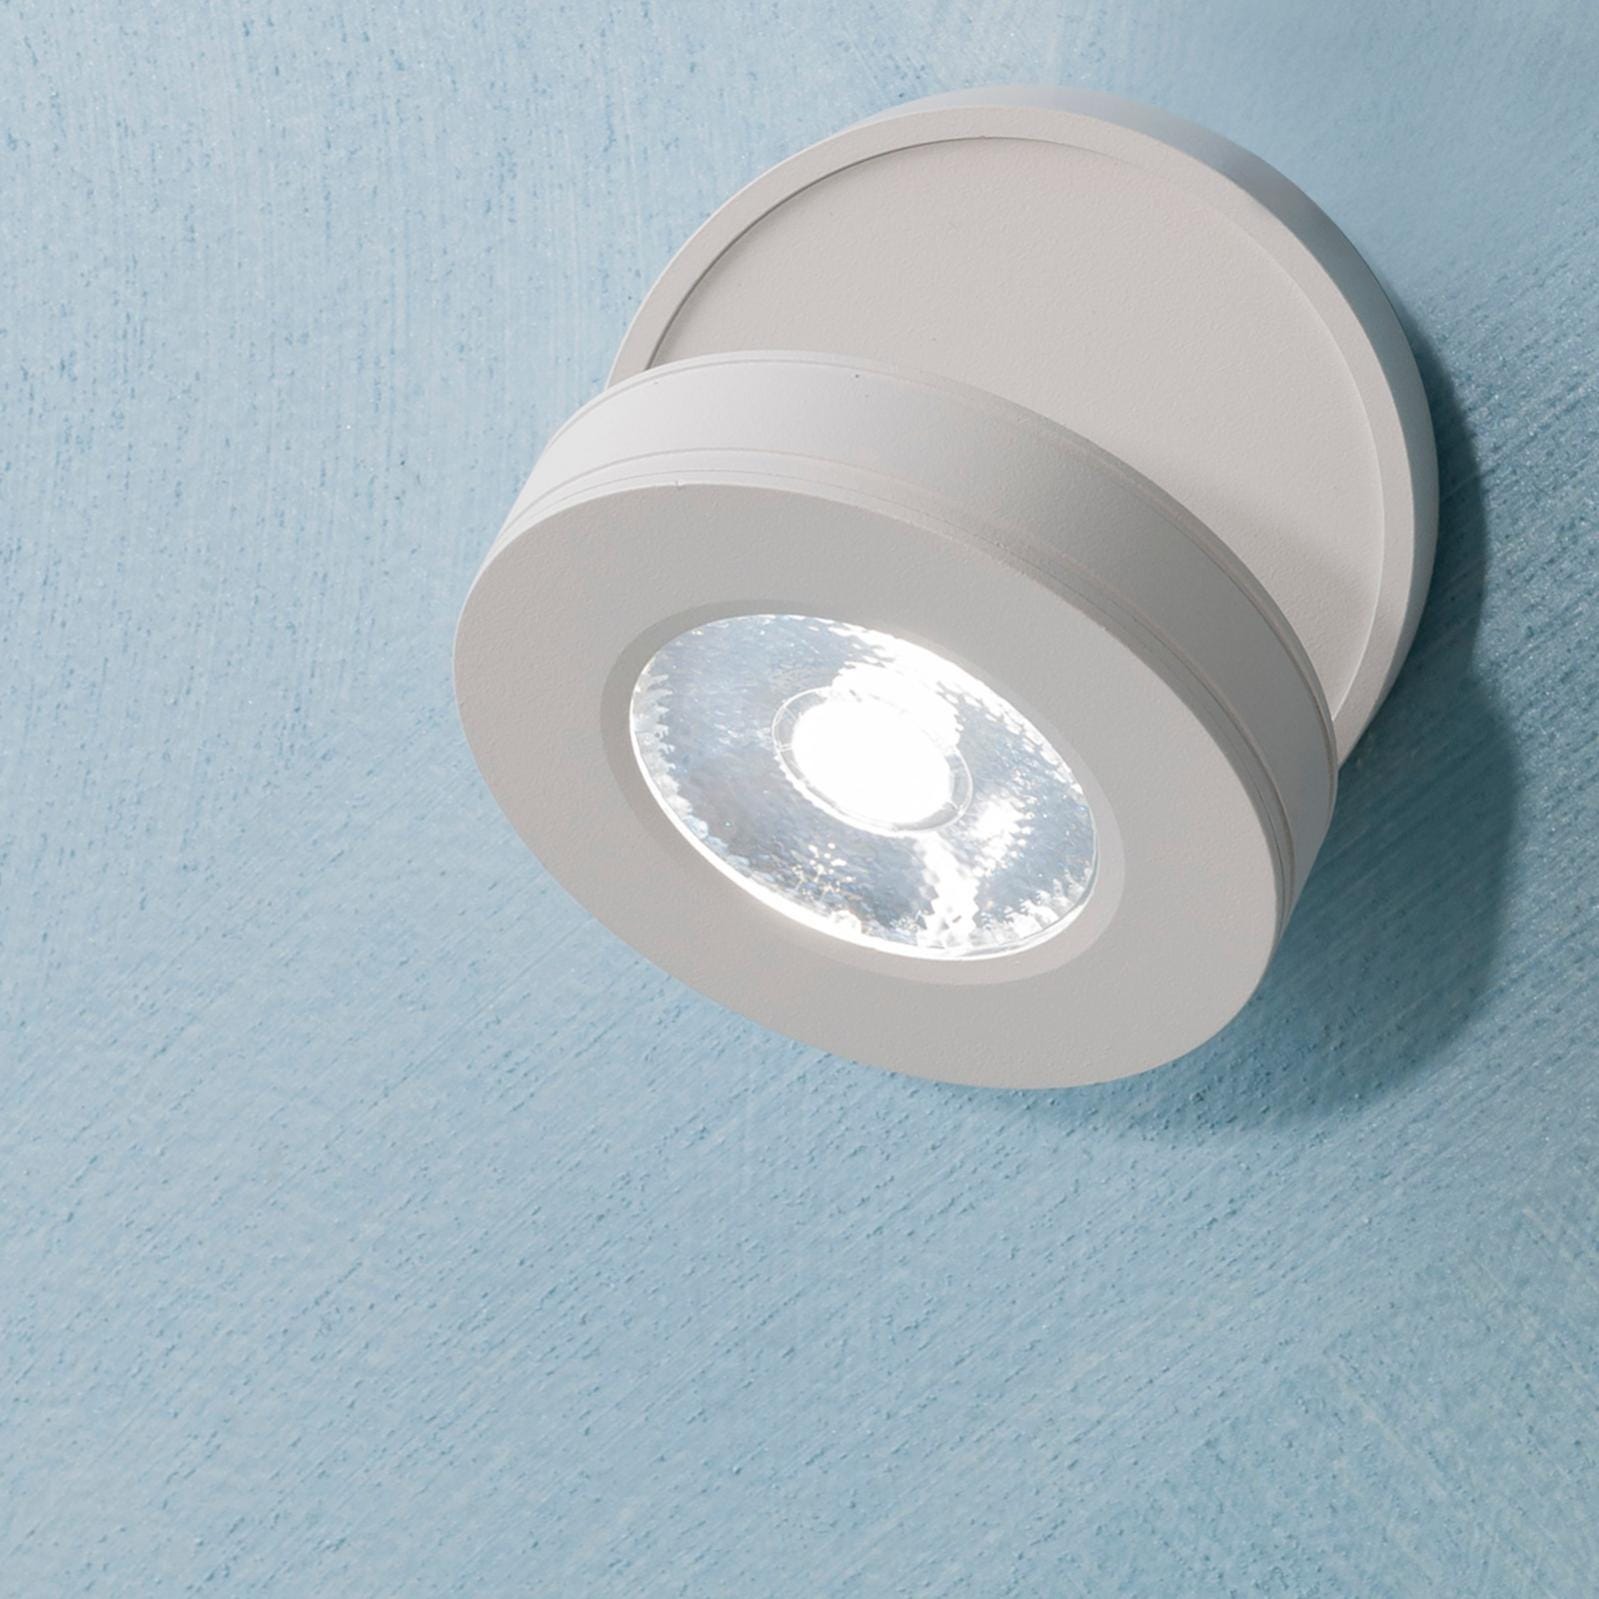 Applique LED 6W 2 in 1 lampada parete luce lettura orientabile